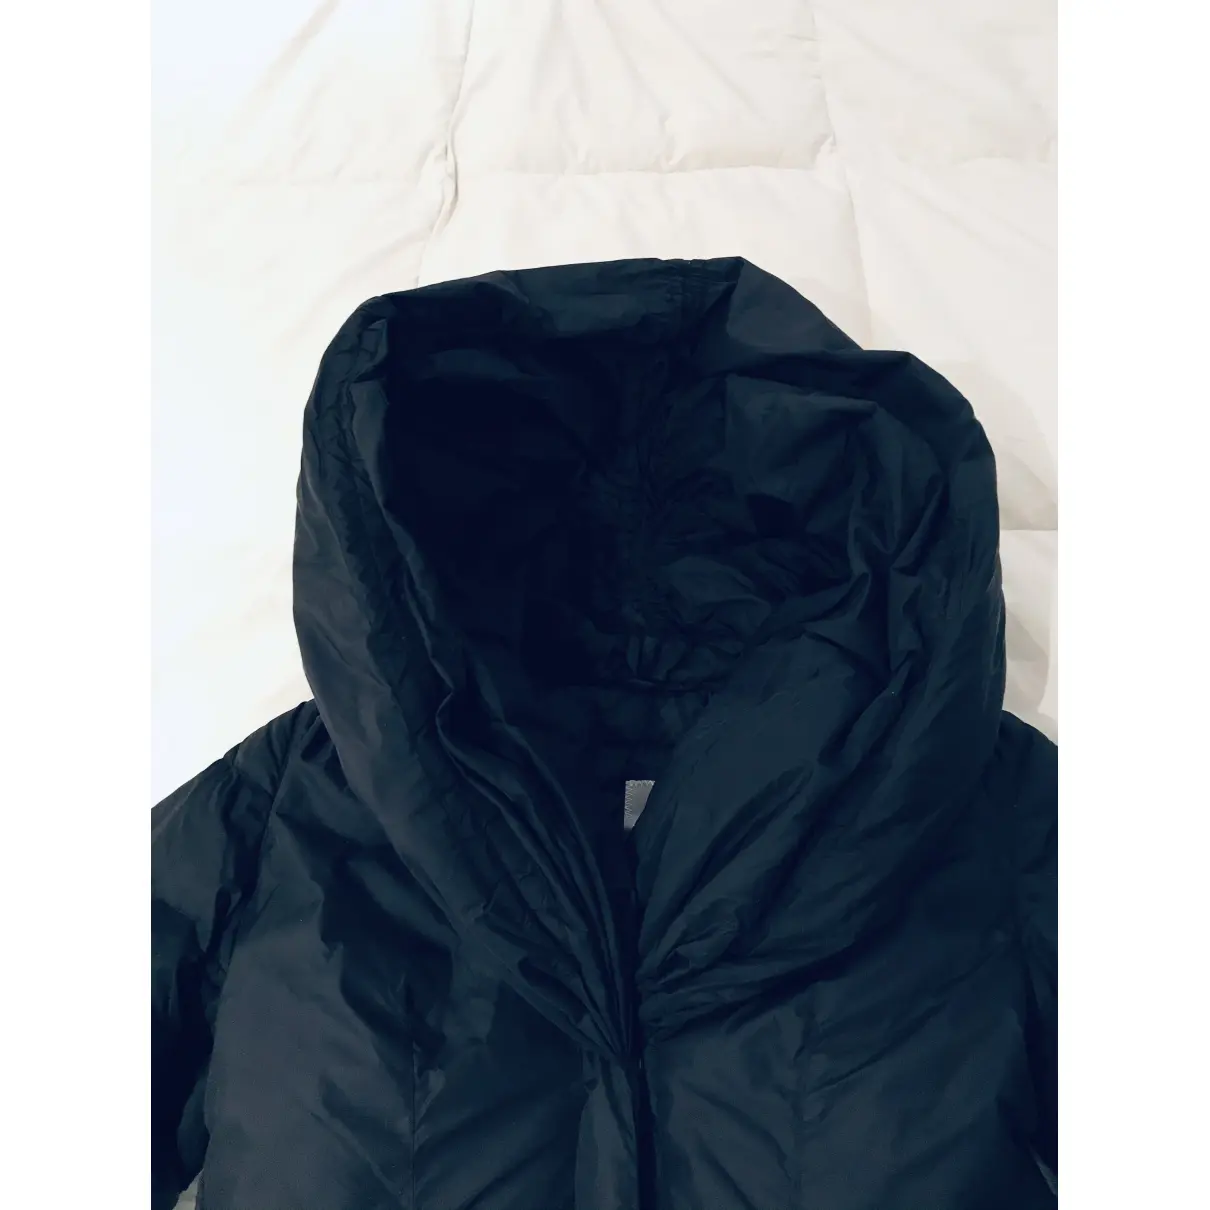 Black Synthetic Jacket Add